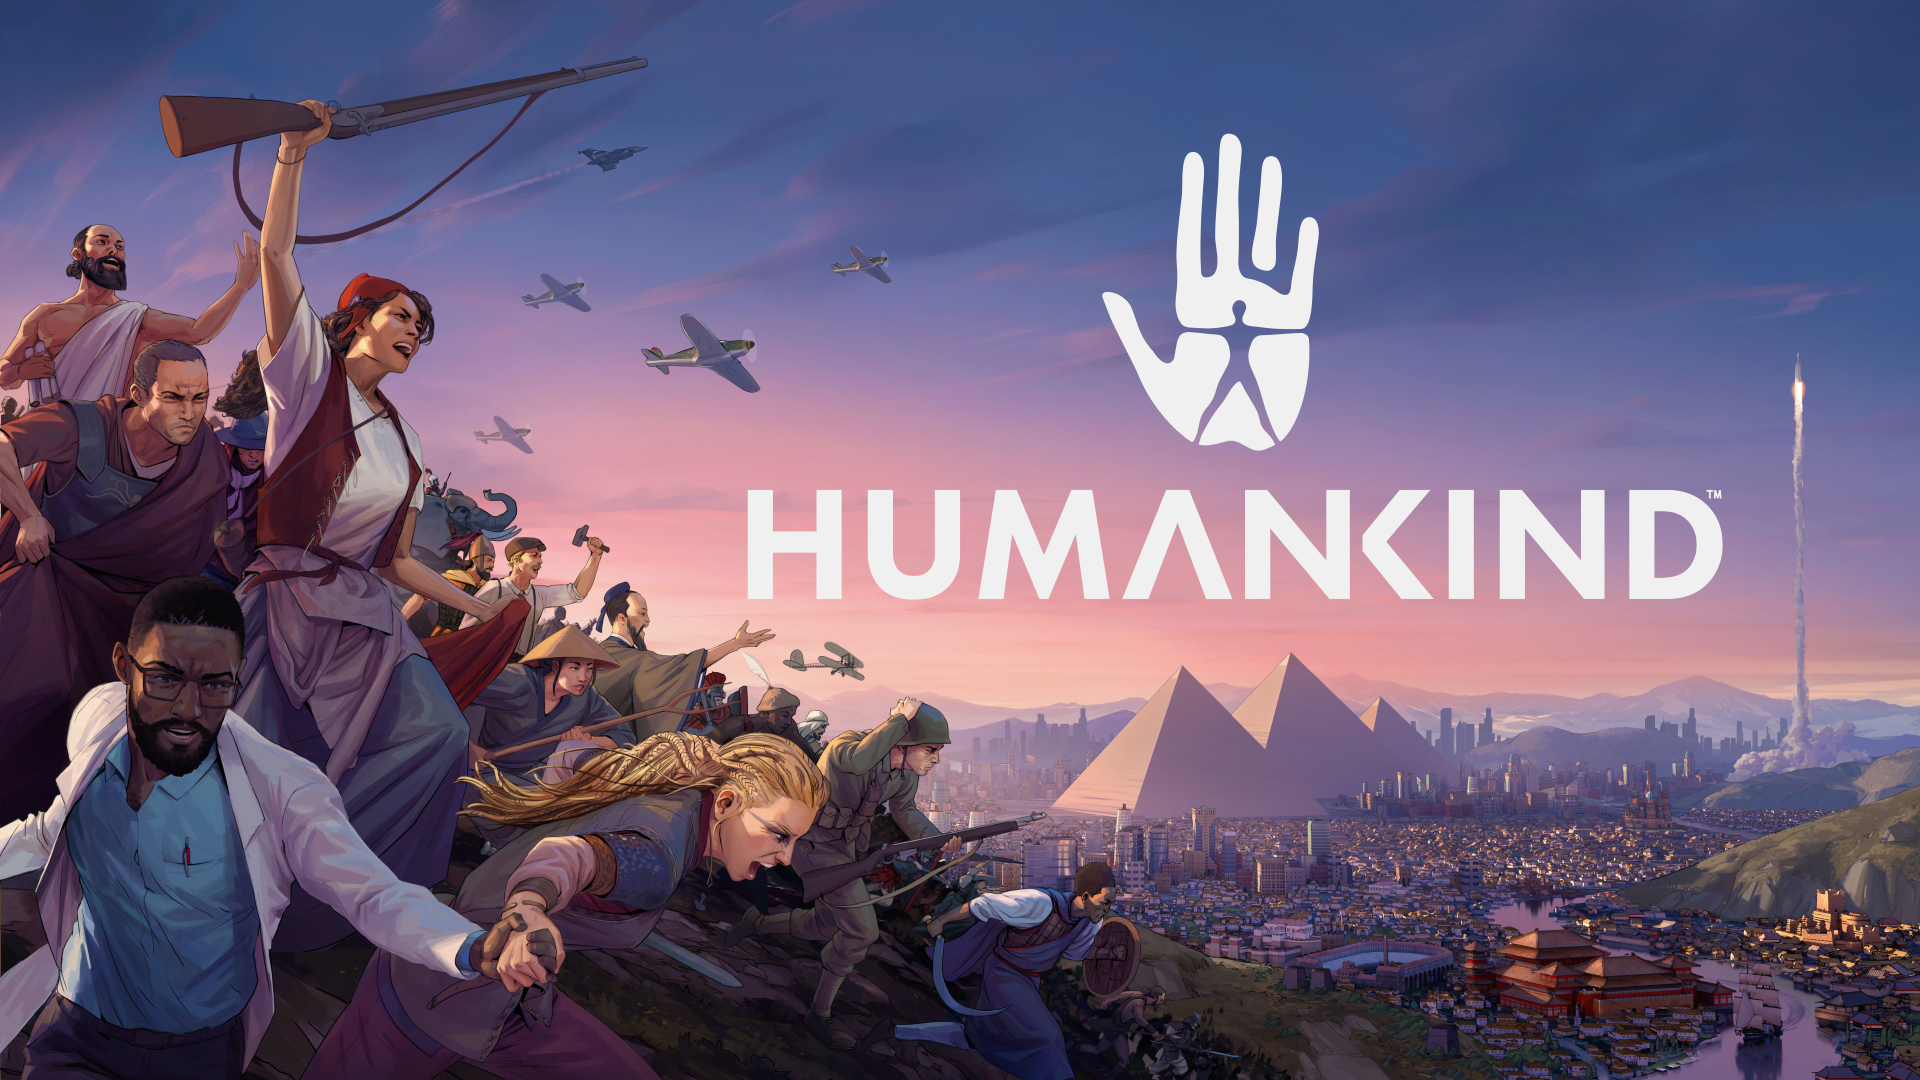 humankind xbox game pass